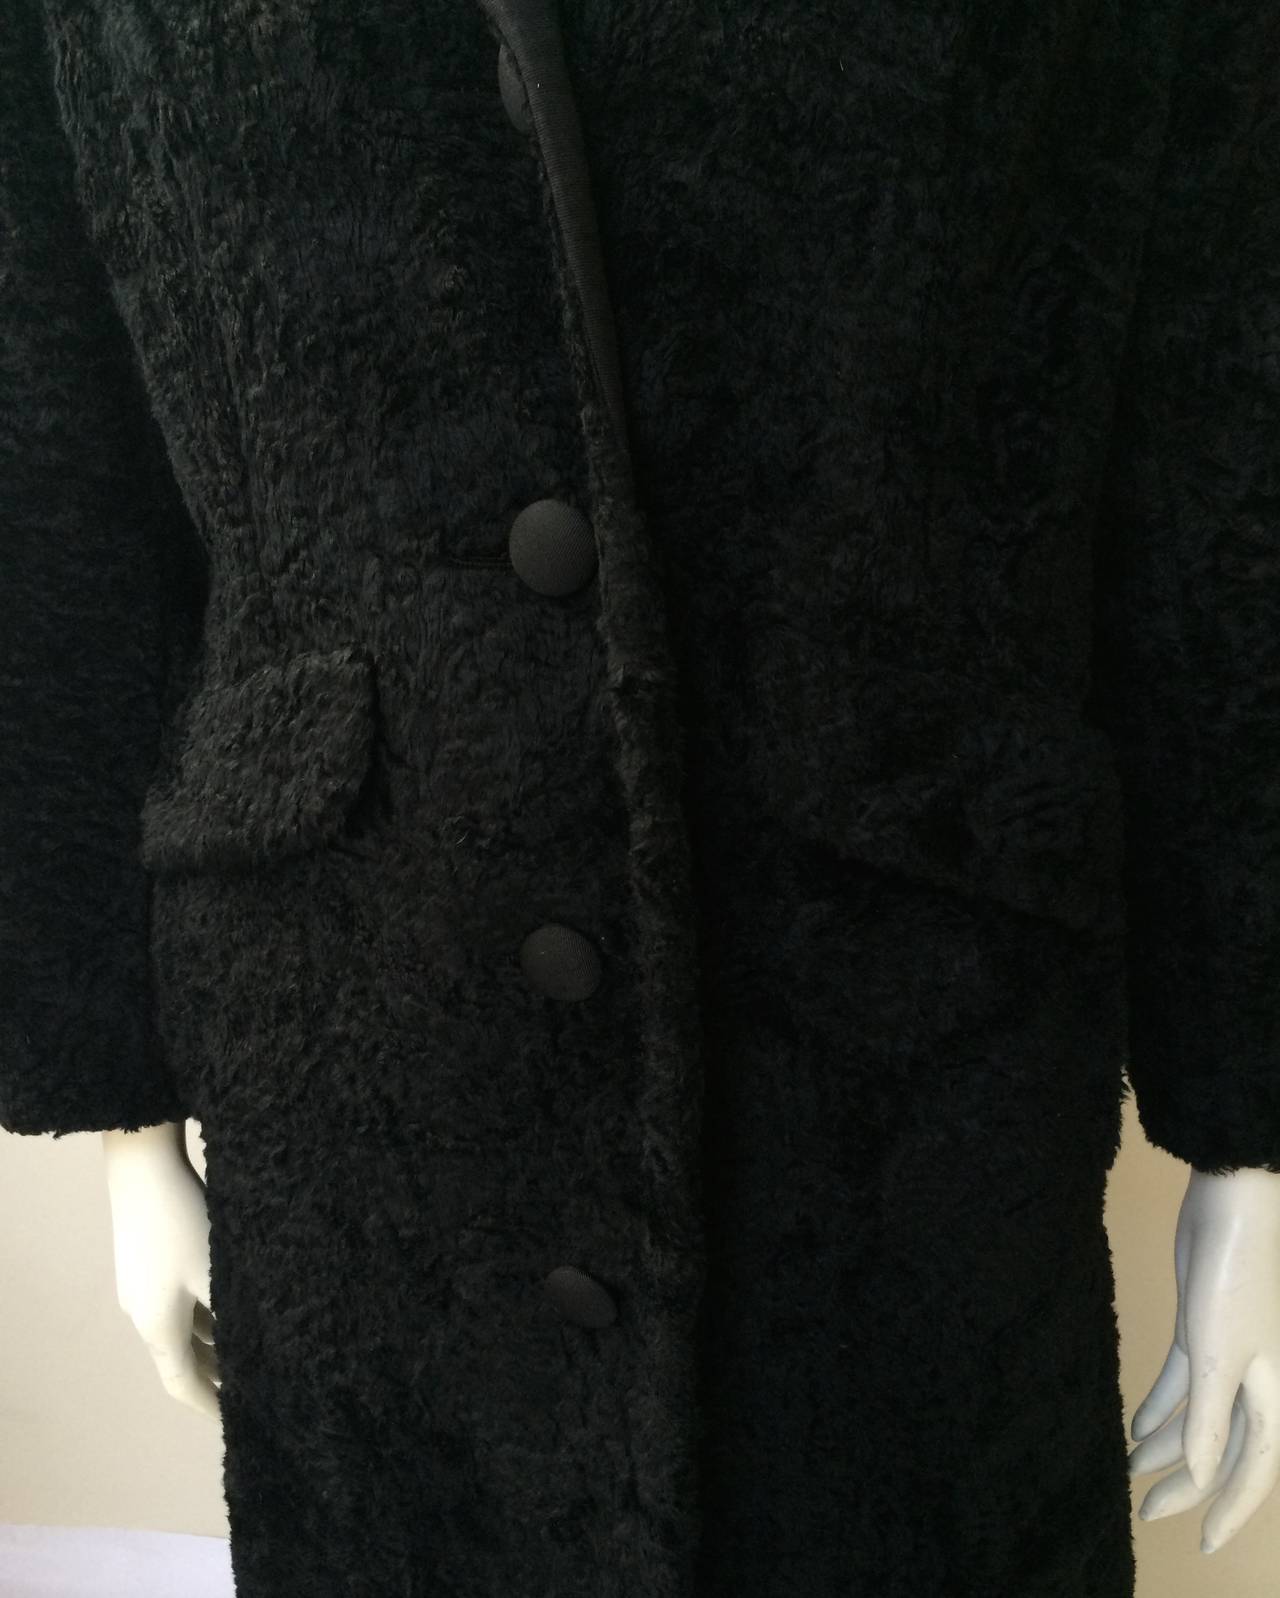 Bonwit Teller 60s pile fabric long coat. For Sale at 1stdibs